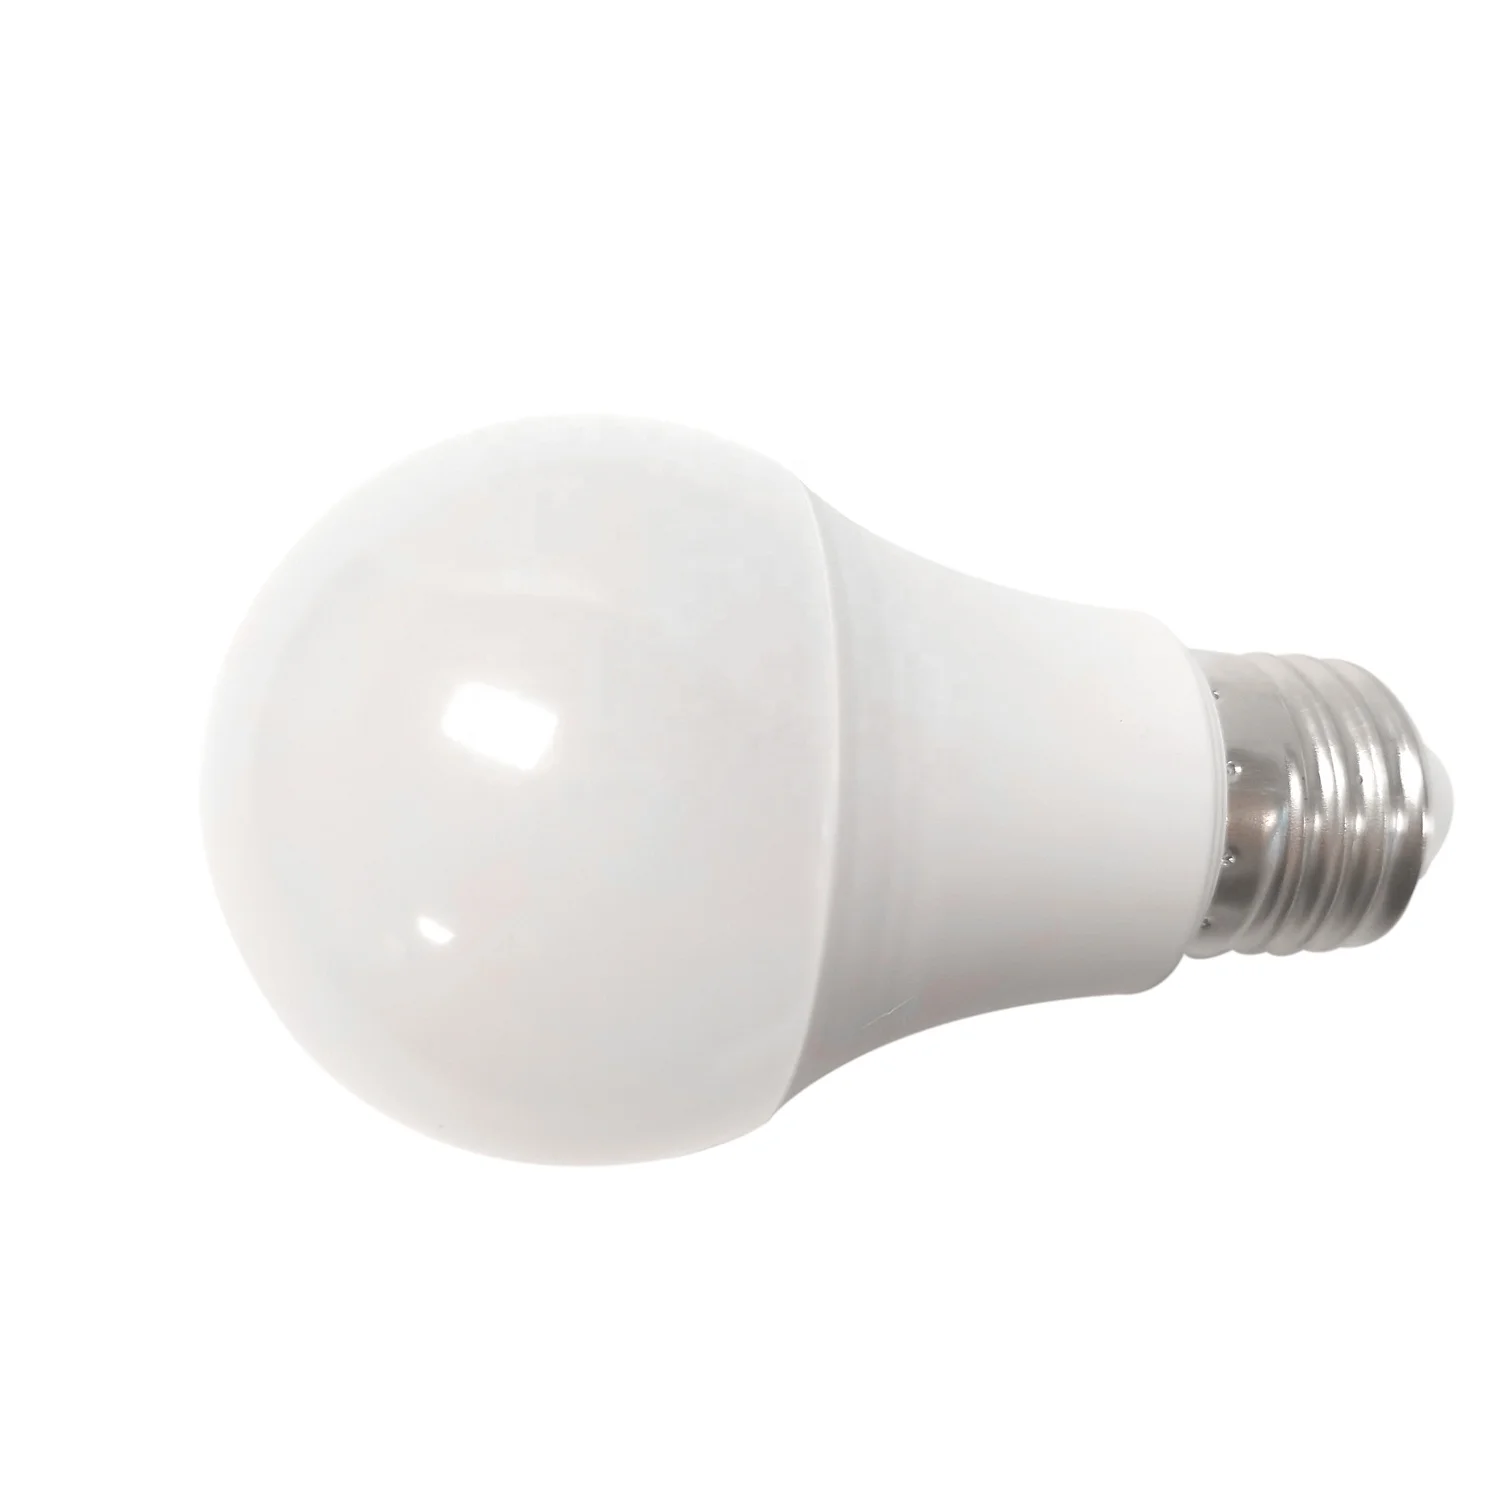 E27 Dimmable 5 Watt Led Lamp Bulbs White Cool Led Strobe Lights - Buy Led Lamp Bulbs,5 Watt Led Bulb Yellow,E27 Dimmable Led Product on Alibaba.com